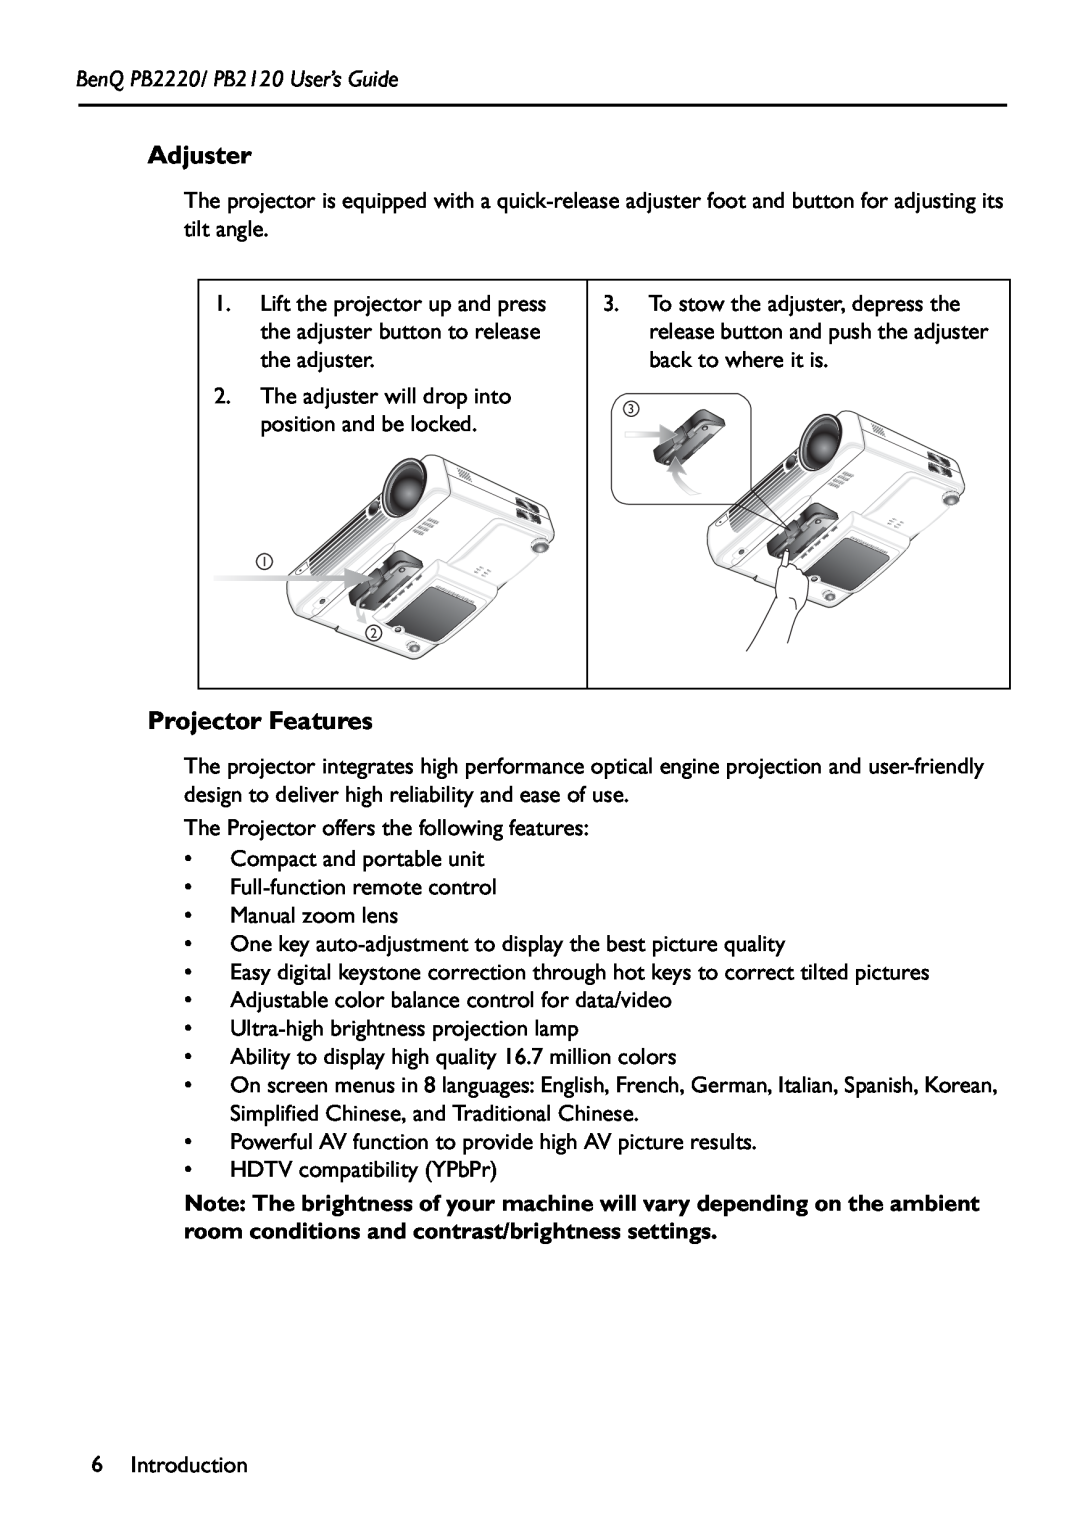 BenQ manual Adjuster, Projector Features, BenQ PB2220/ PB2120 User’s Guide 